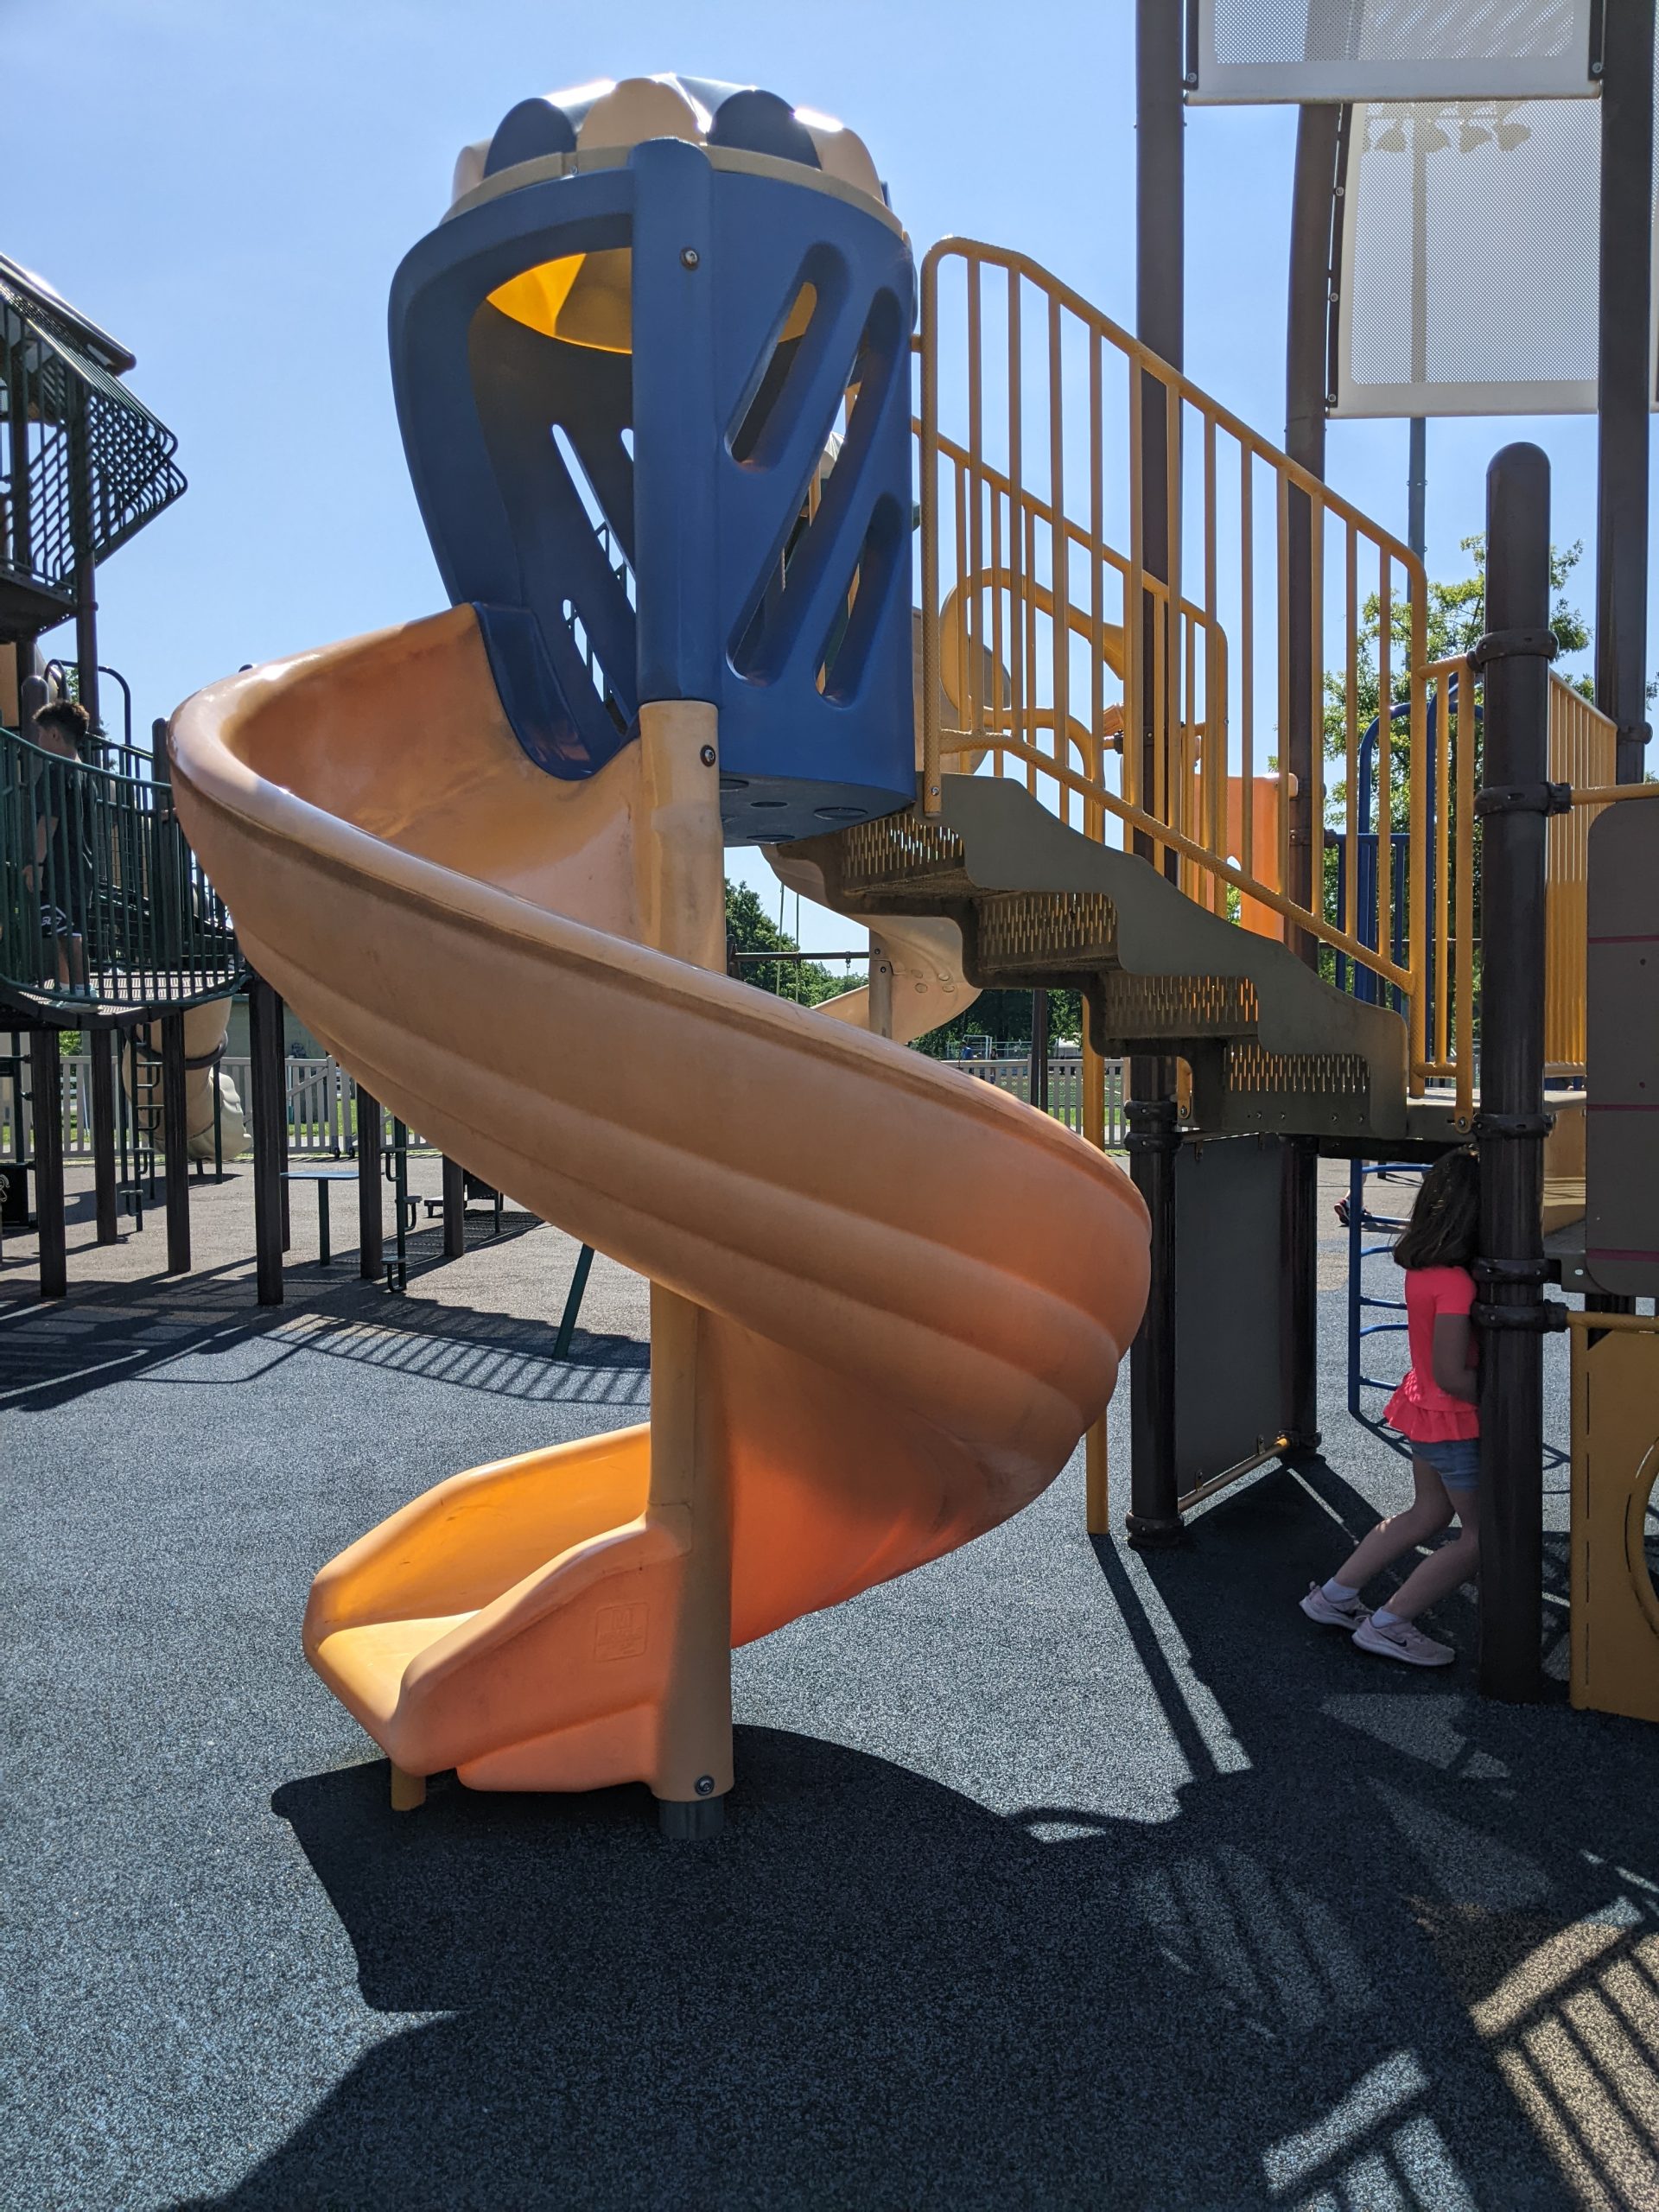 Memorial Park Playground in Marlton NJ Slides smaller twisting slide